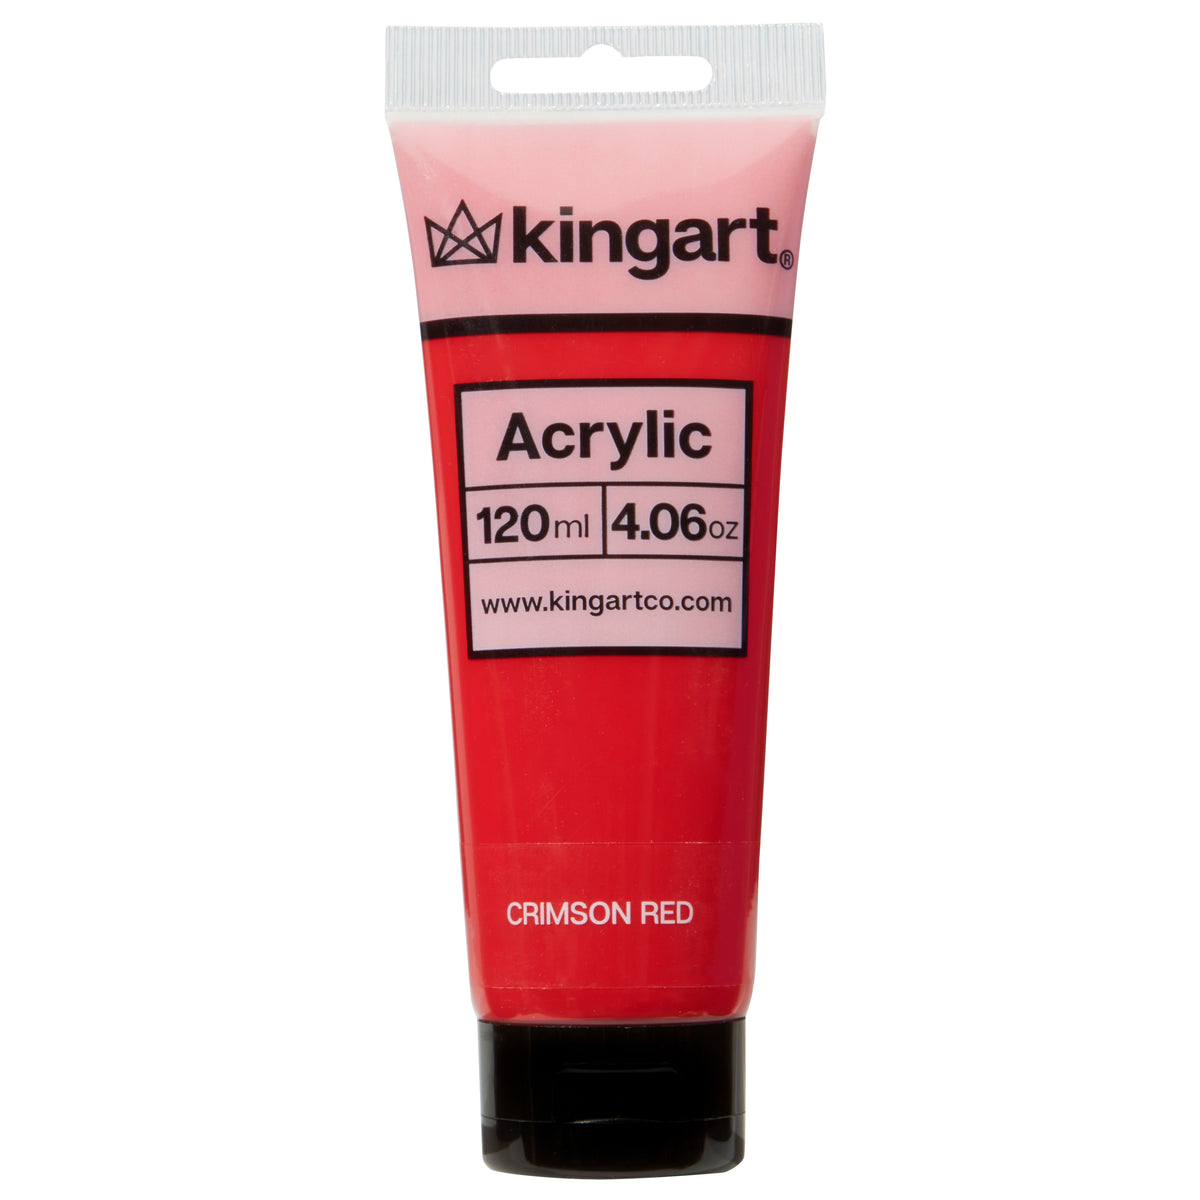 Kingart Pro Metallic Acrylic Paint, 22ml (0.74oz) Set of 24 Rich Pigment, Shimmery Colors